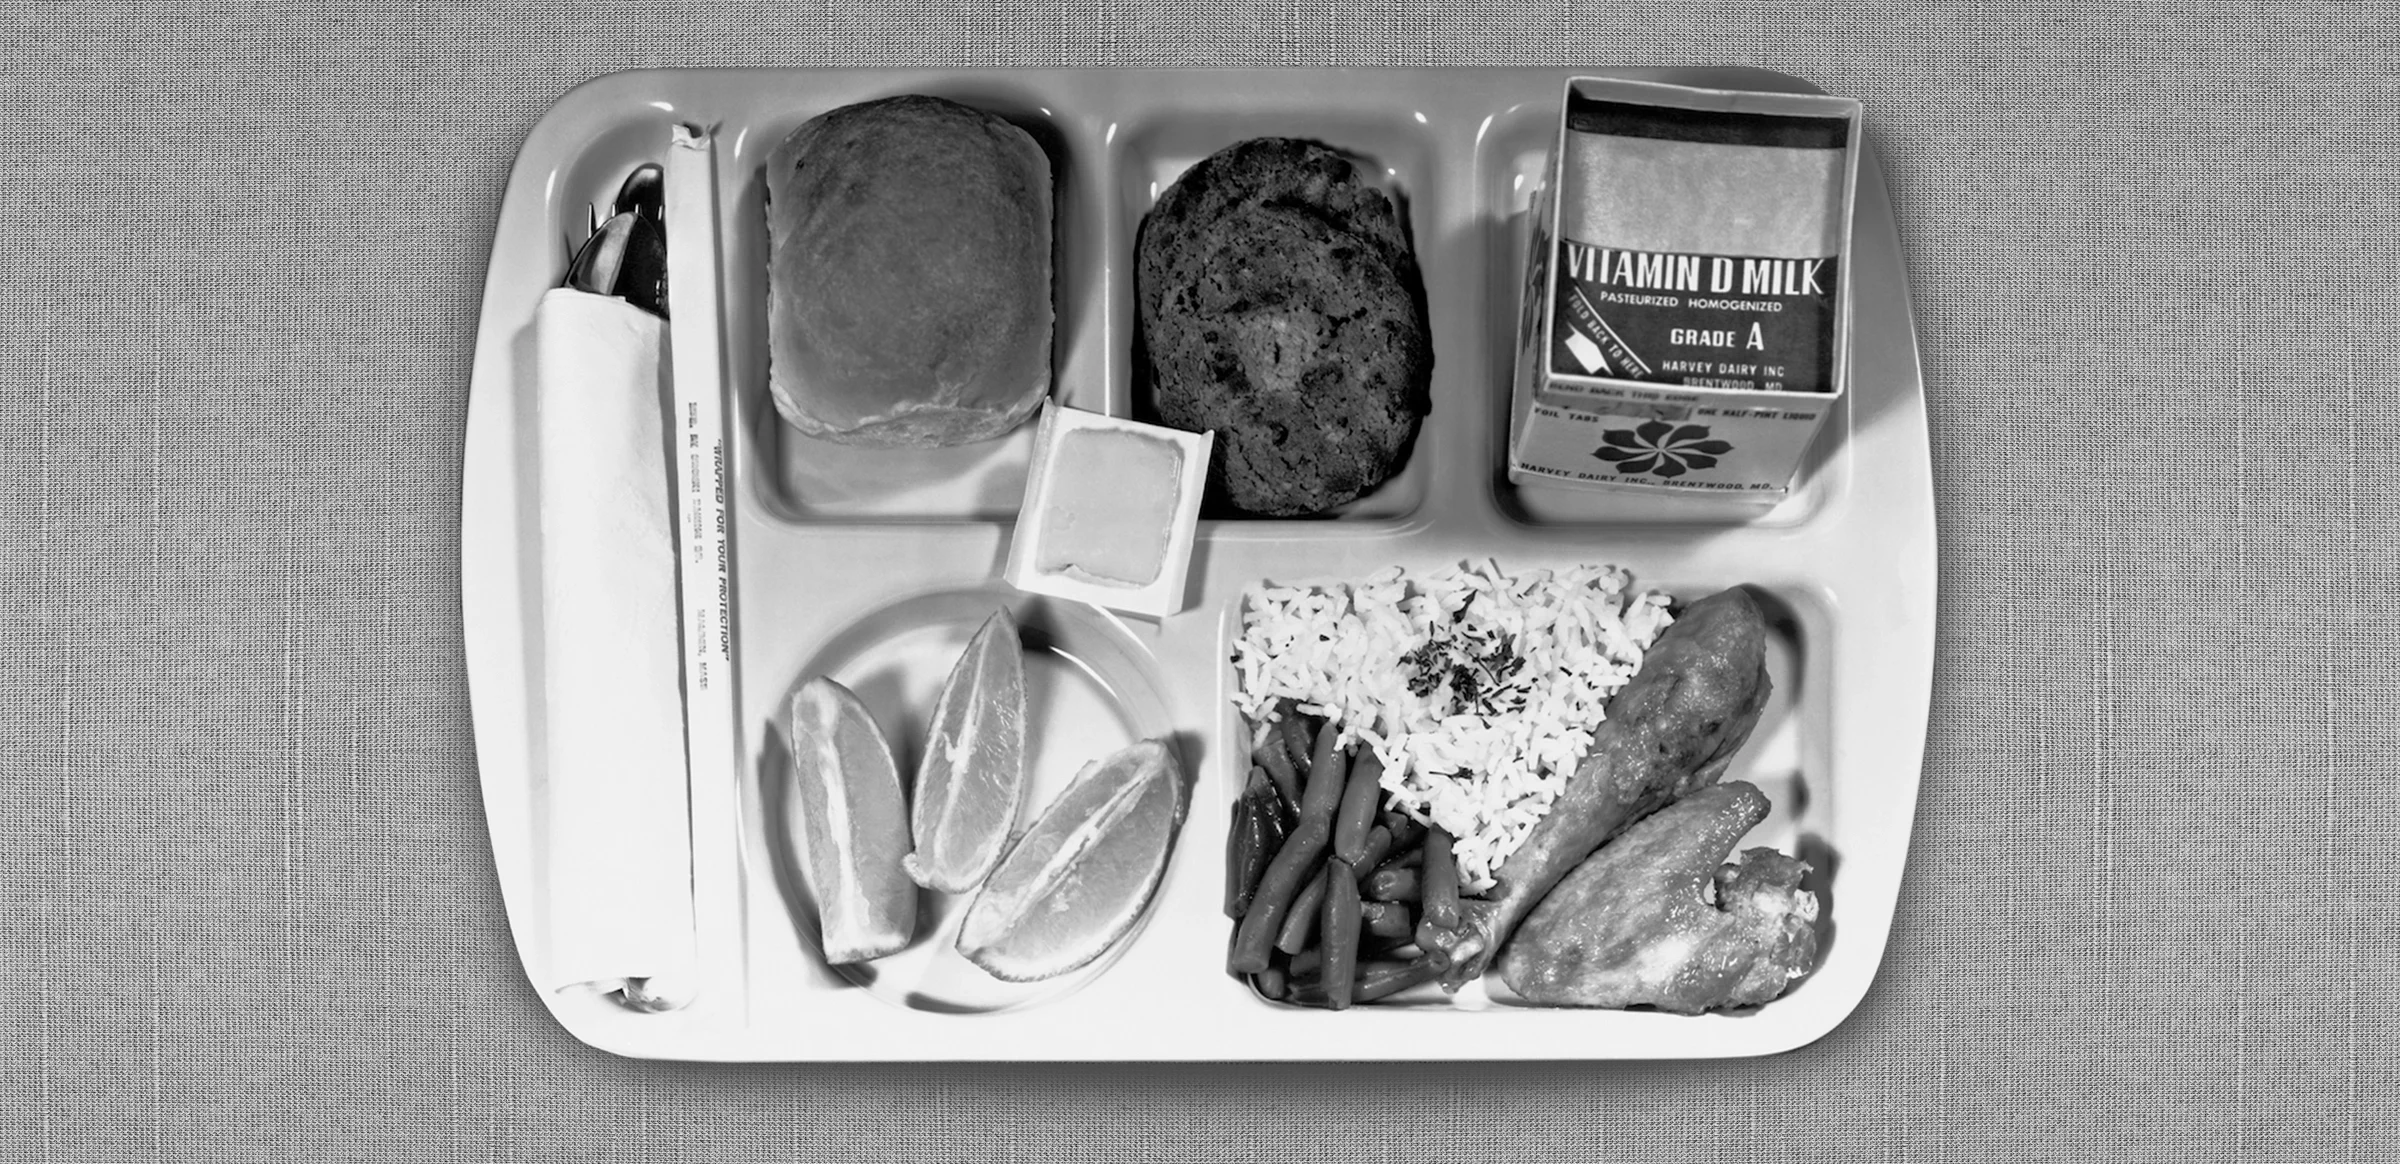 School Lunch 1966